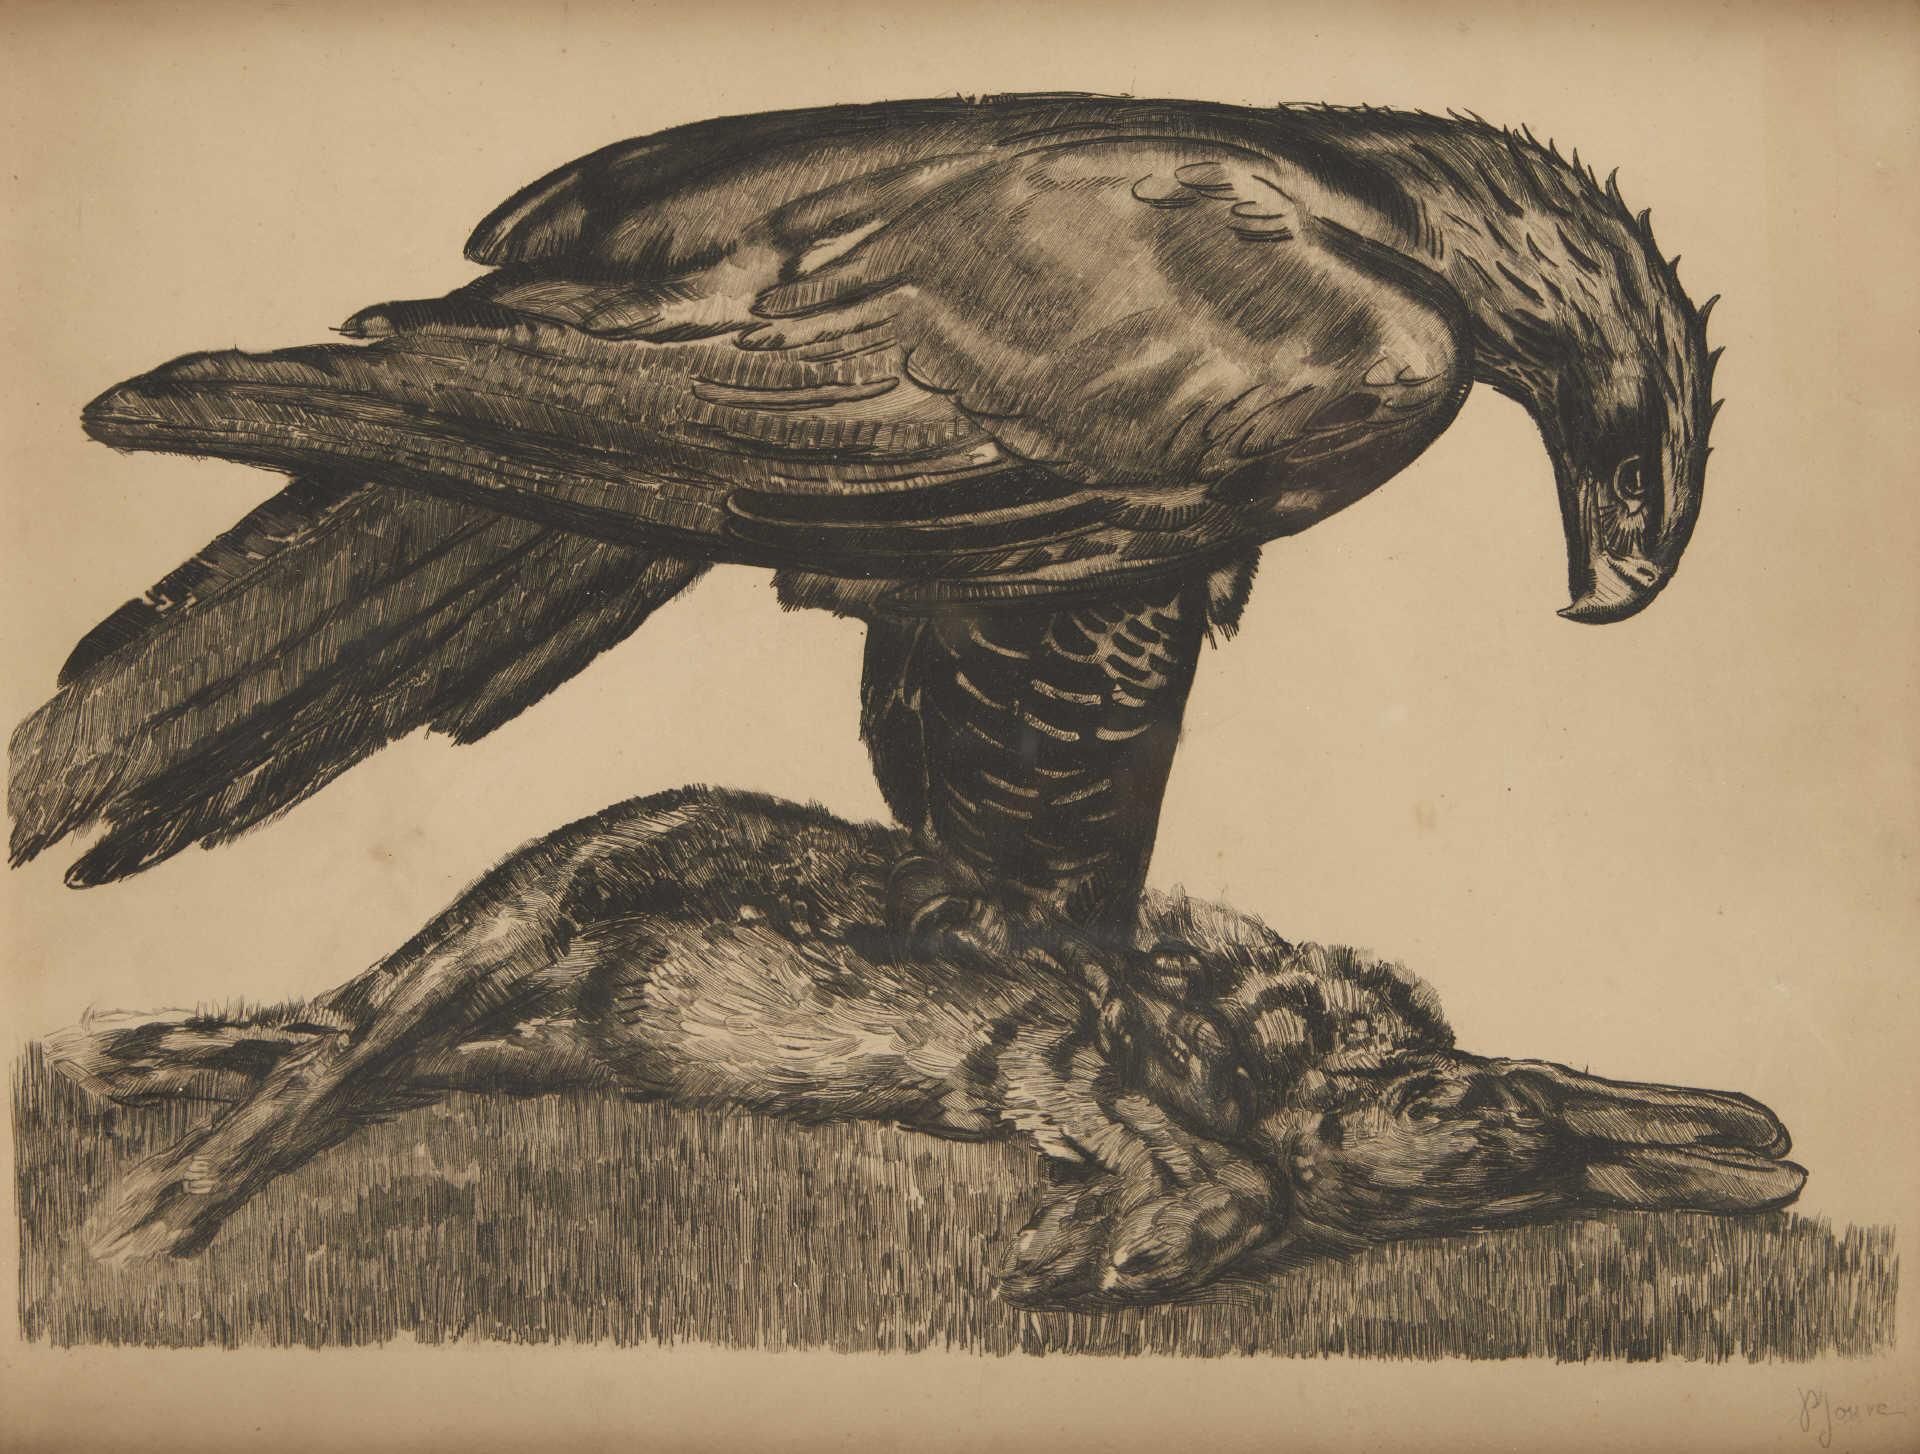 Null 在Paul JOUVE之后

"老鹰围着野兔"，1930年。纸上蚀刻画。

42 x 51 cm (展出中)

事故

	

历史：1930年为阿波罗&hellip;